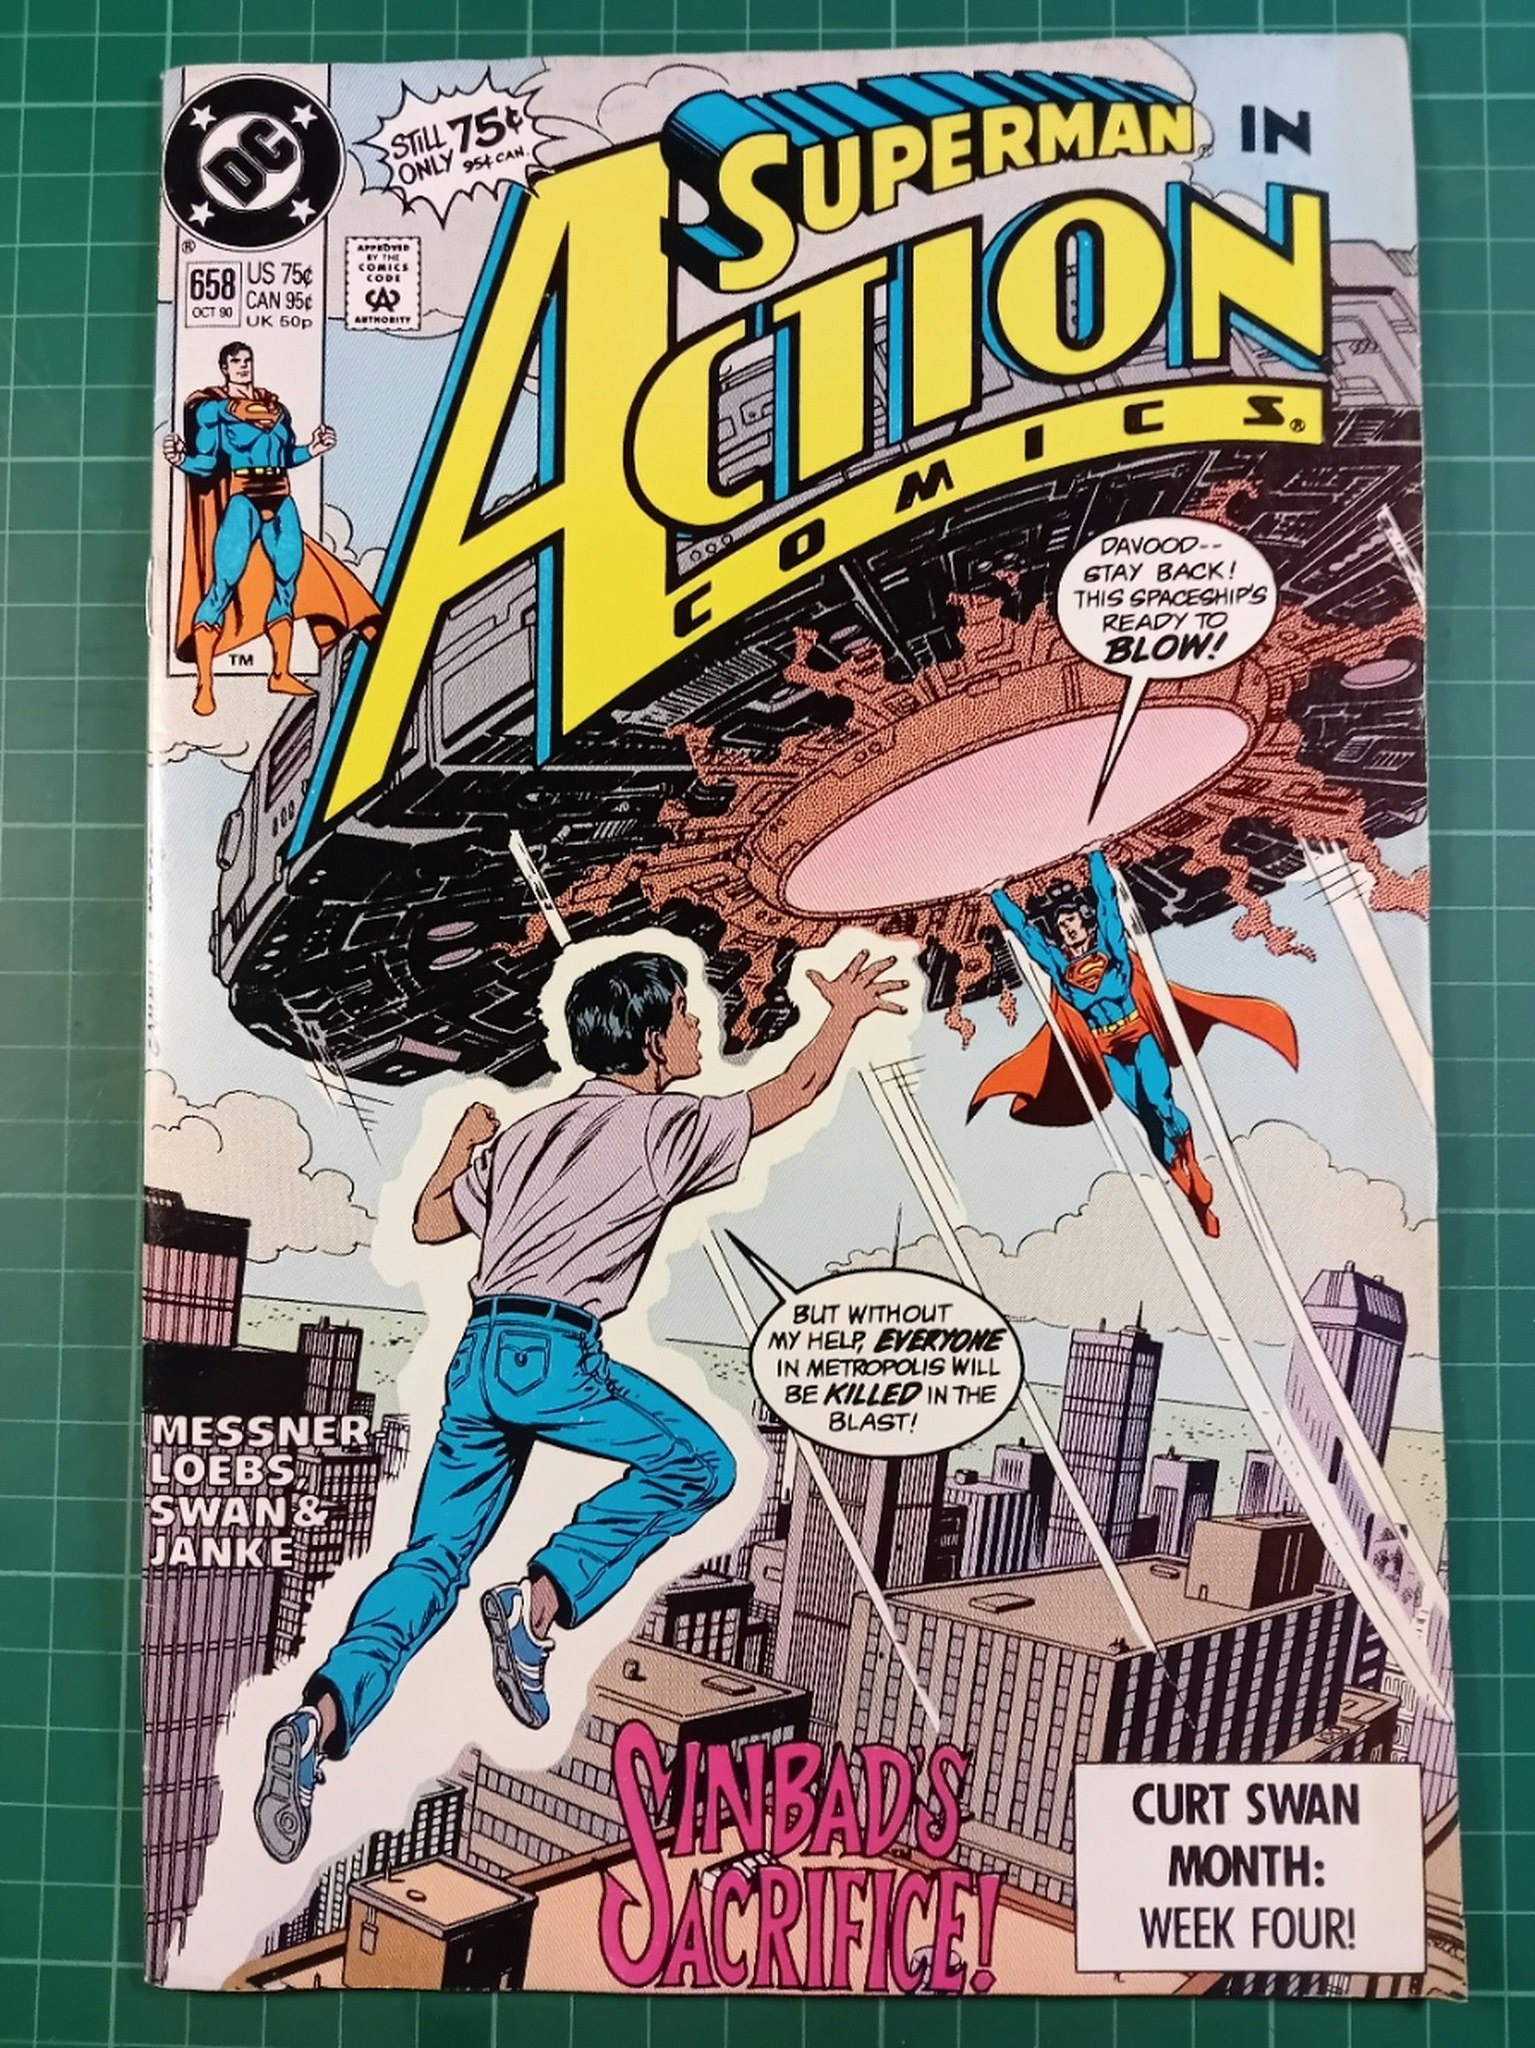 Superman in Action comics #658